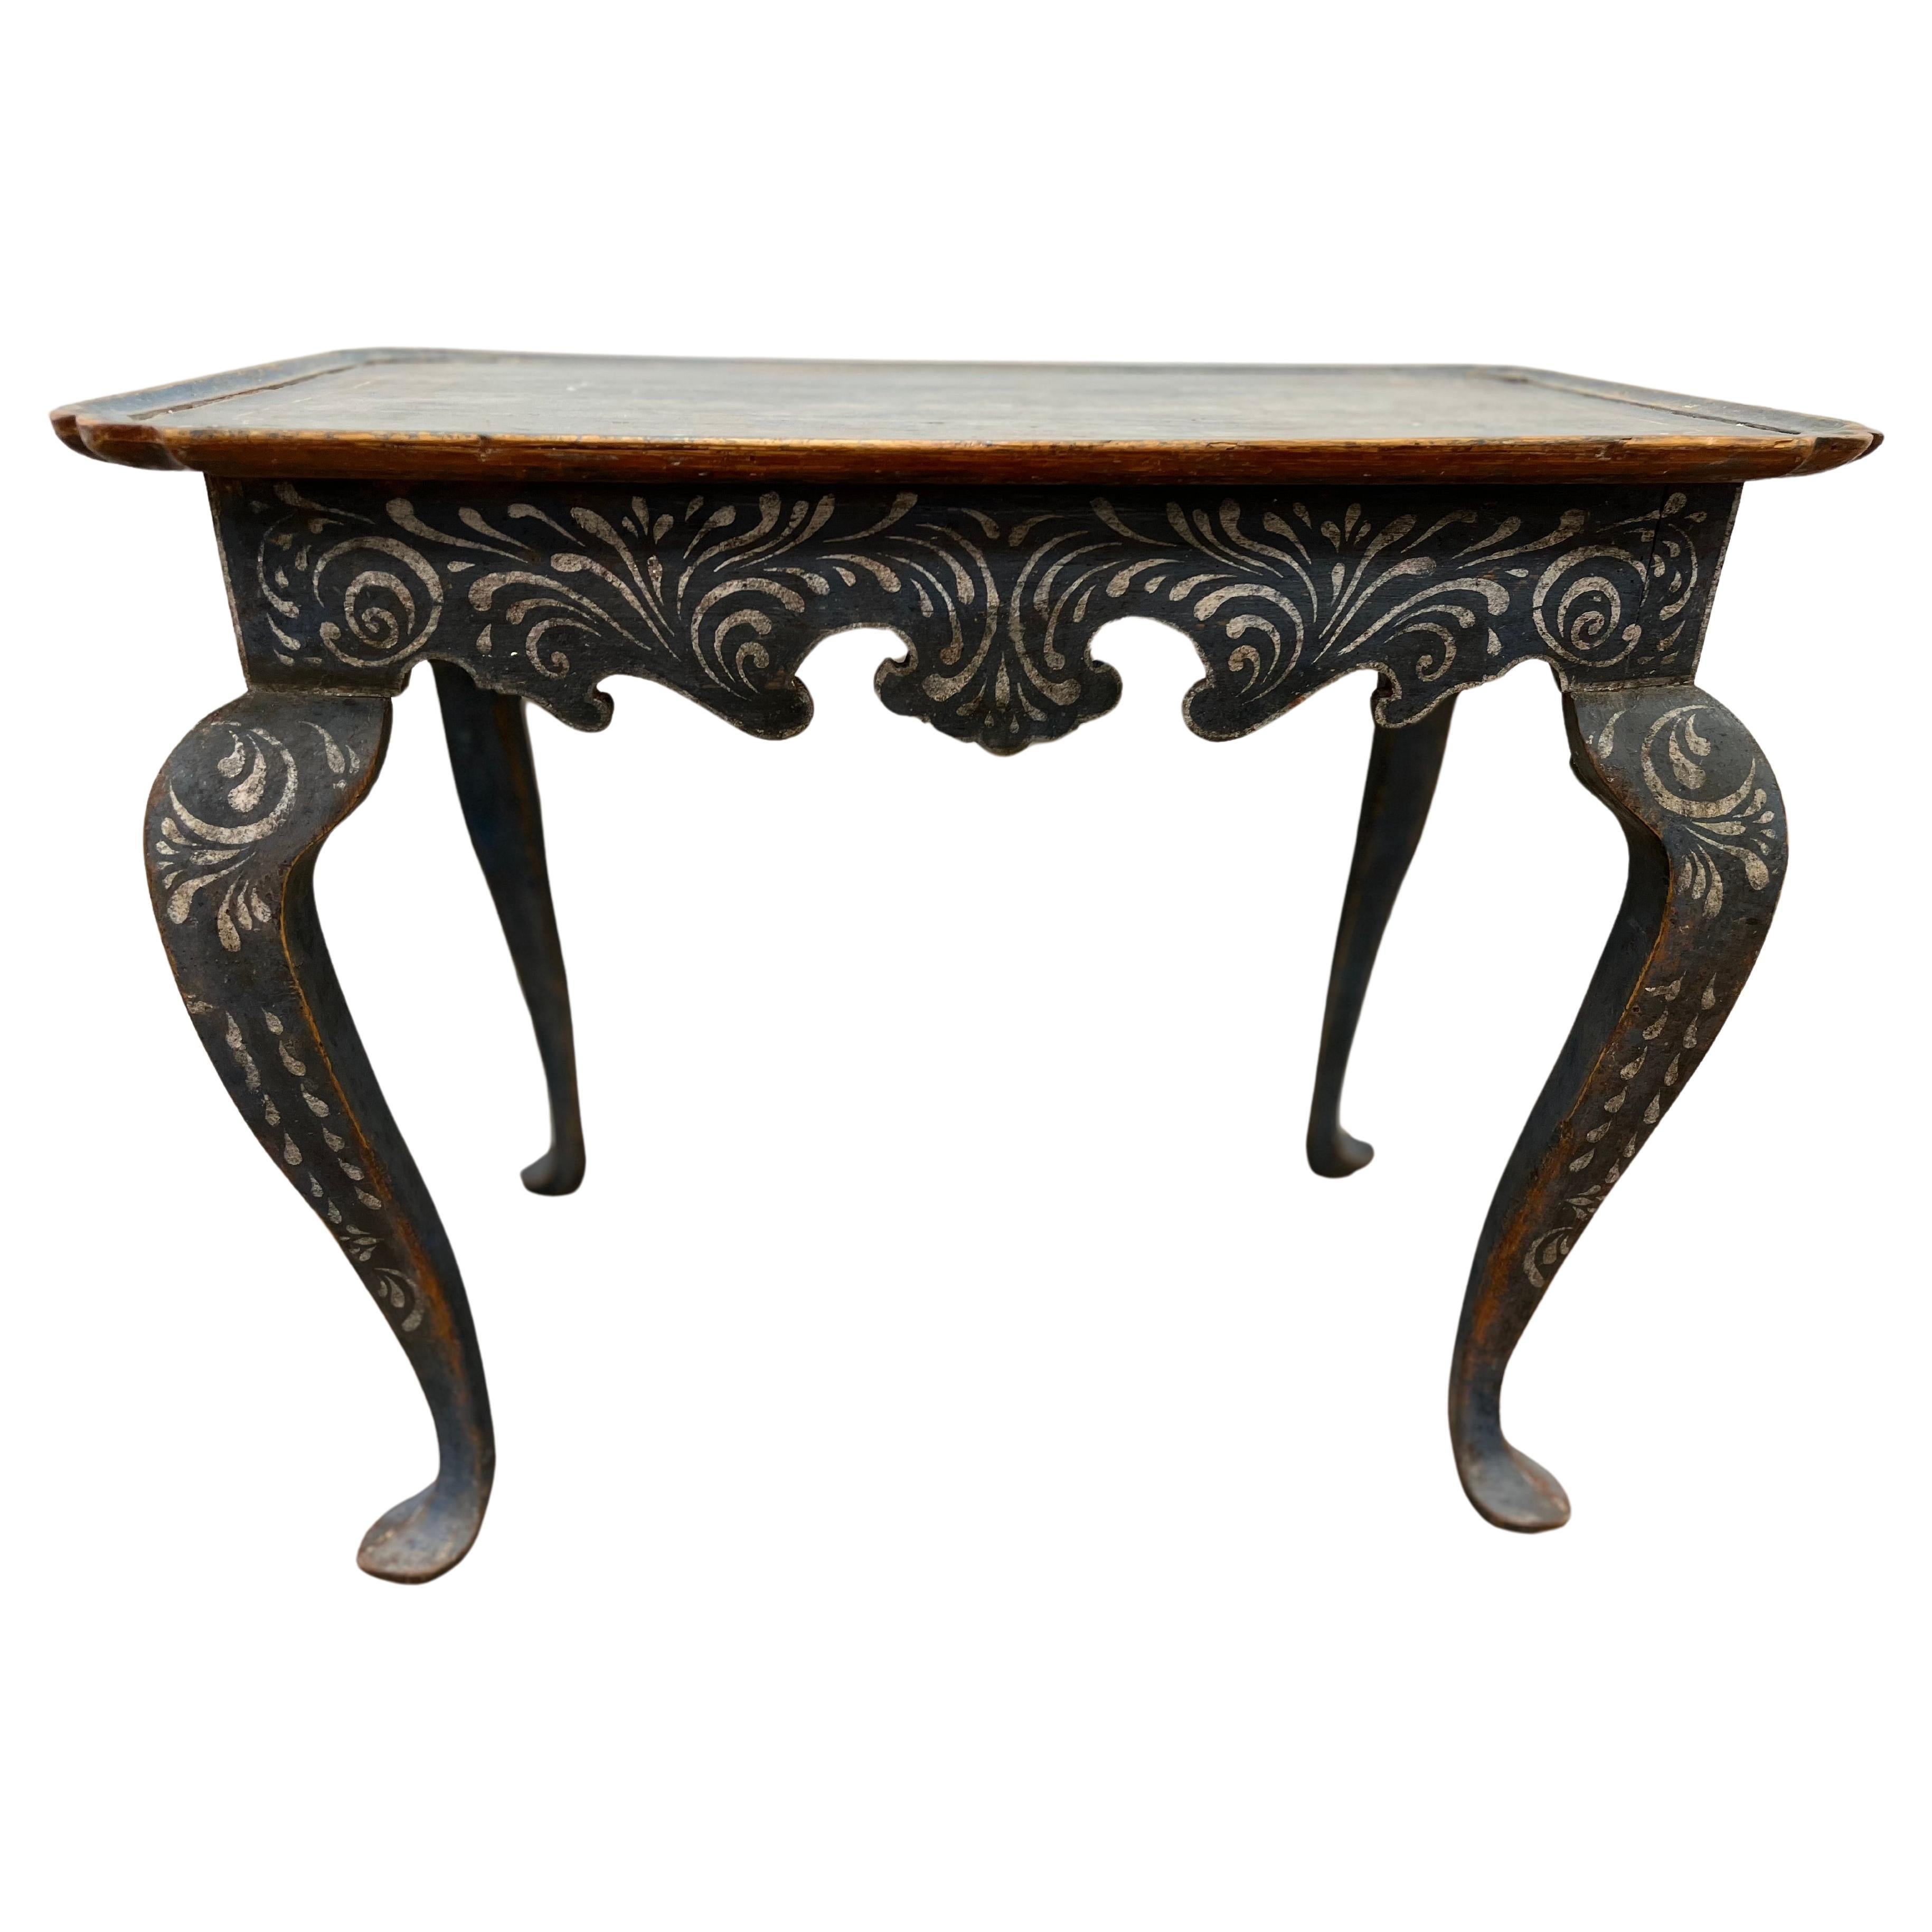 Table rococo suédoise du XVIIIe siècle en vente